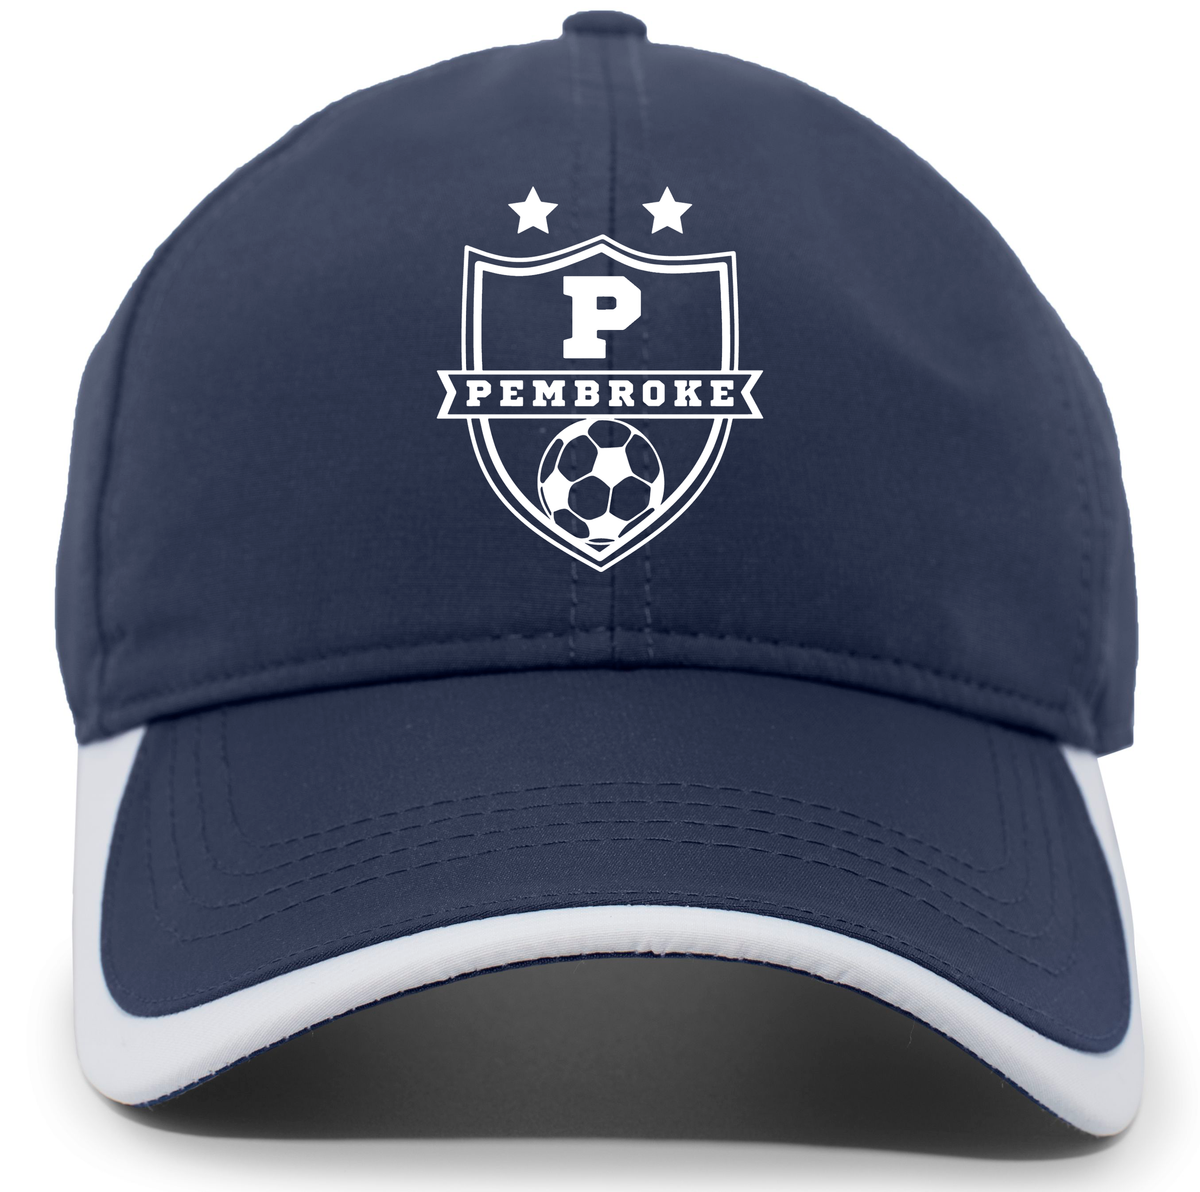 Pembroke Soccer Lite Series Cap With Trim